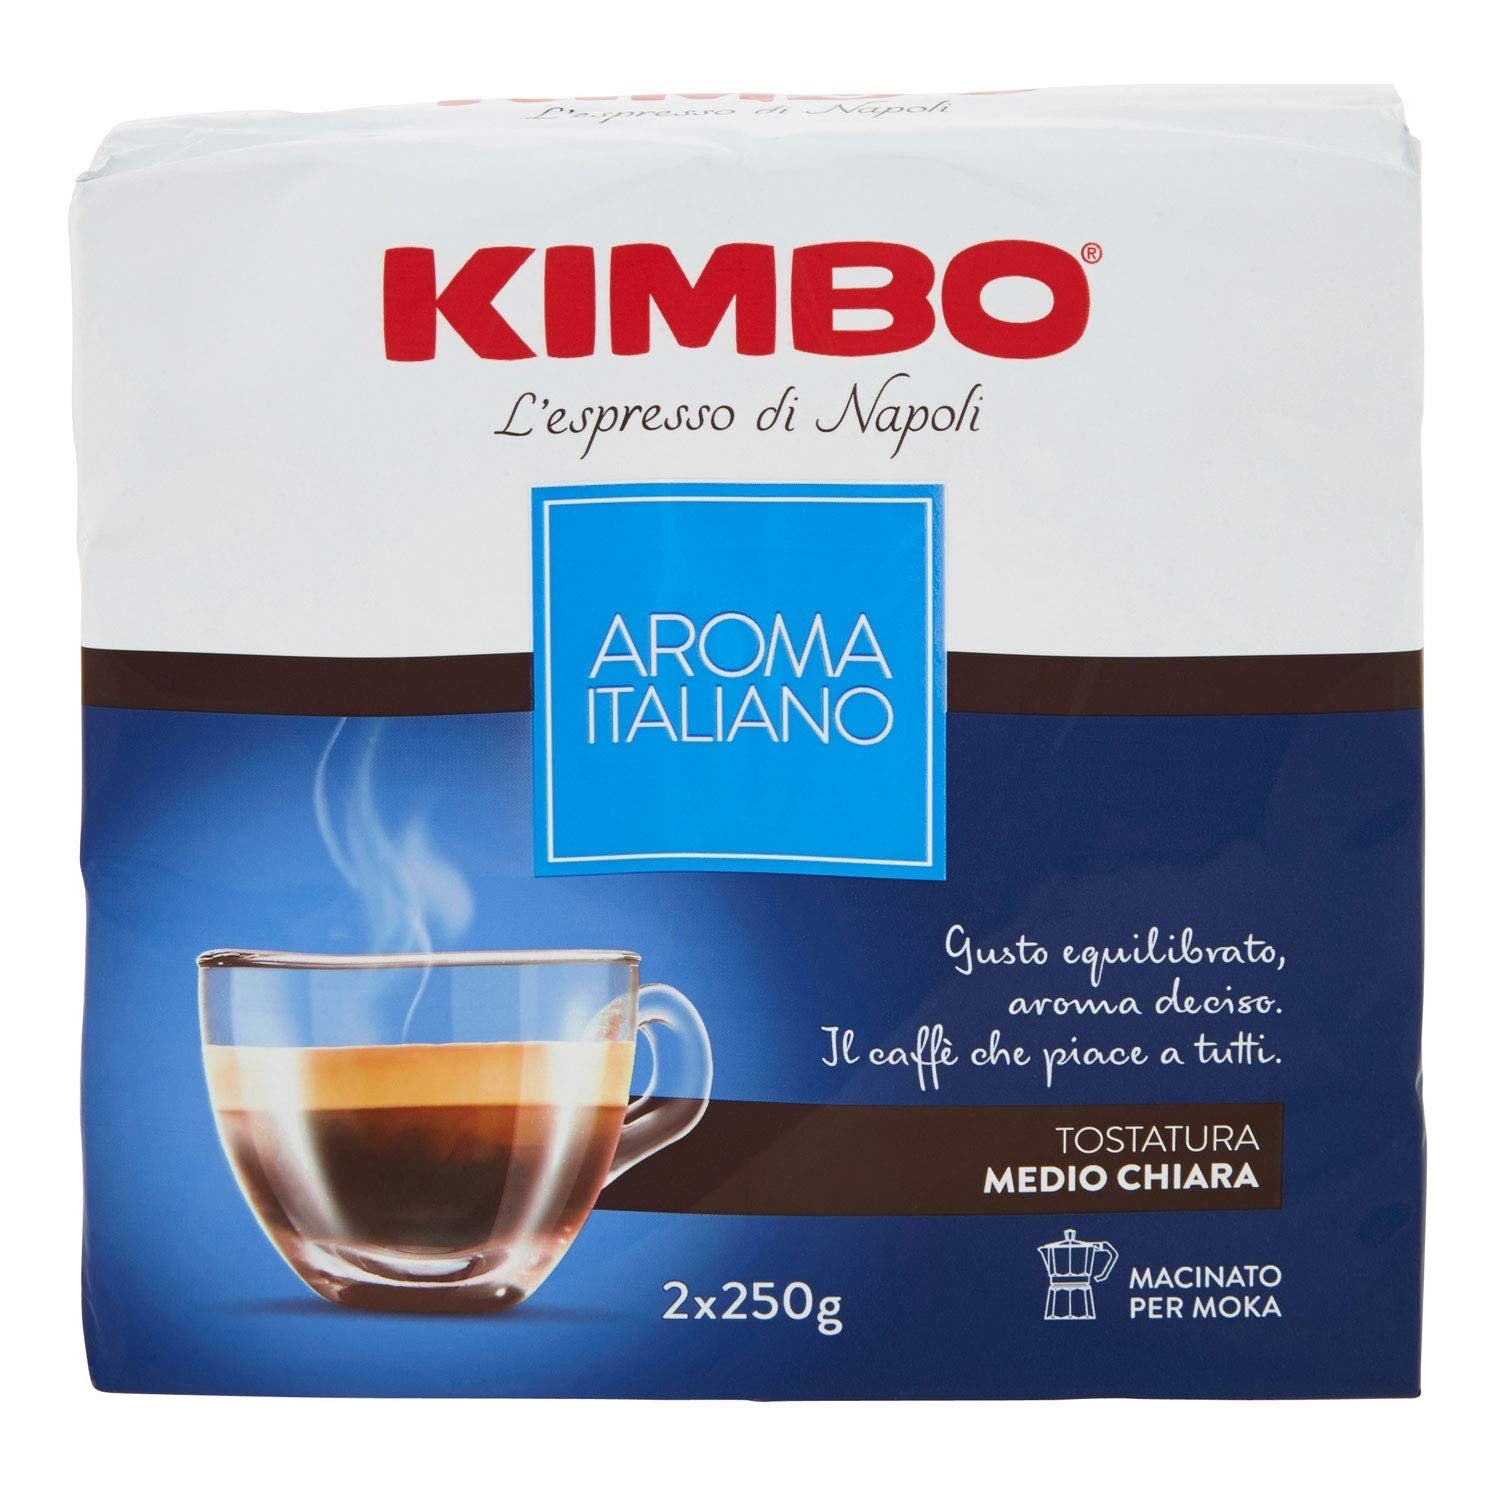 Kimbo Aroma Italiano convenient pack 2x250g – Made In Eatalia